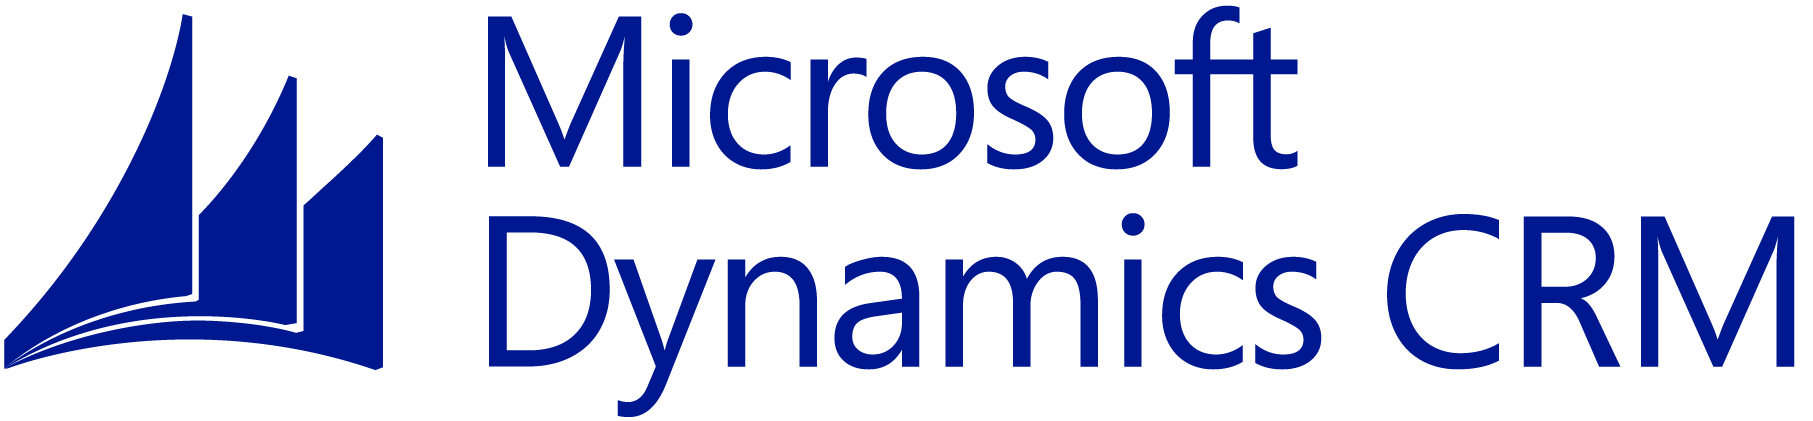 MS Dynamics CRM Logo - Microsoft Dynamics CRM 2011 Update Rollup 16 - Dynamics Consulting ...